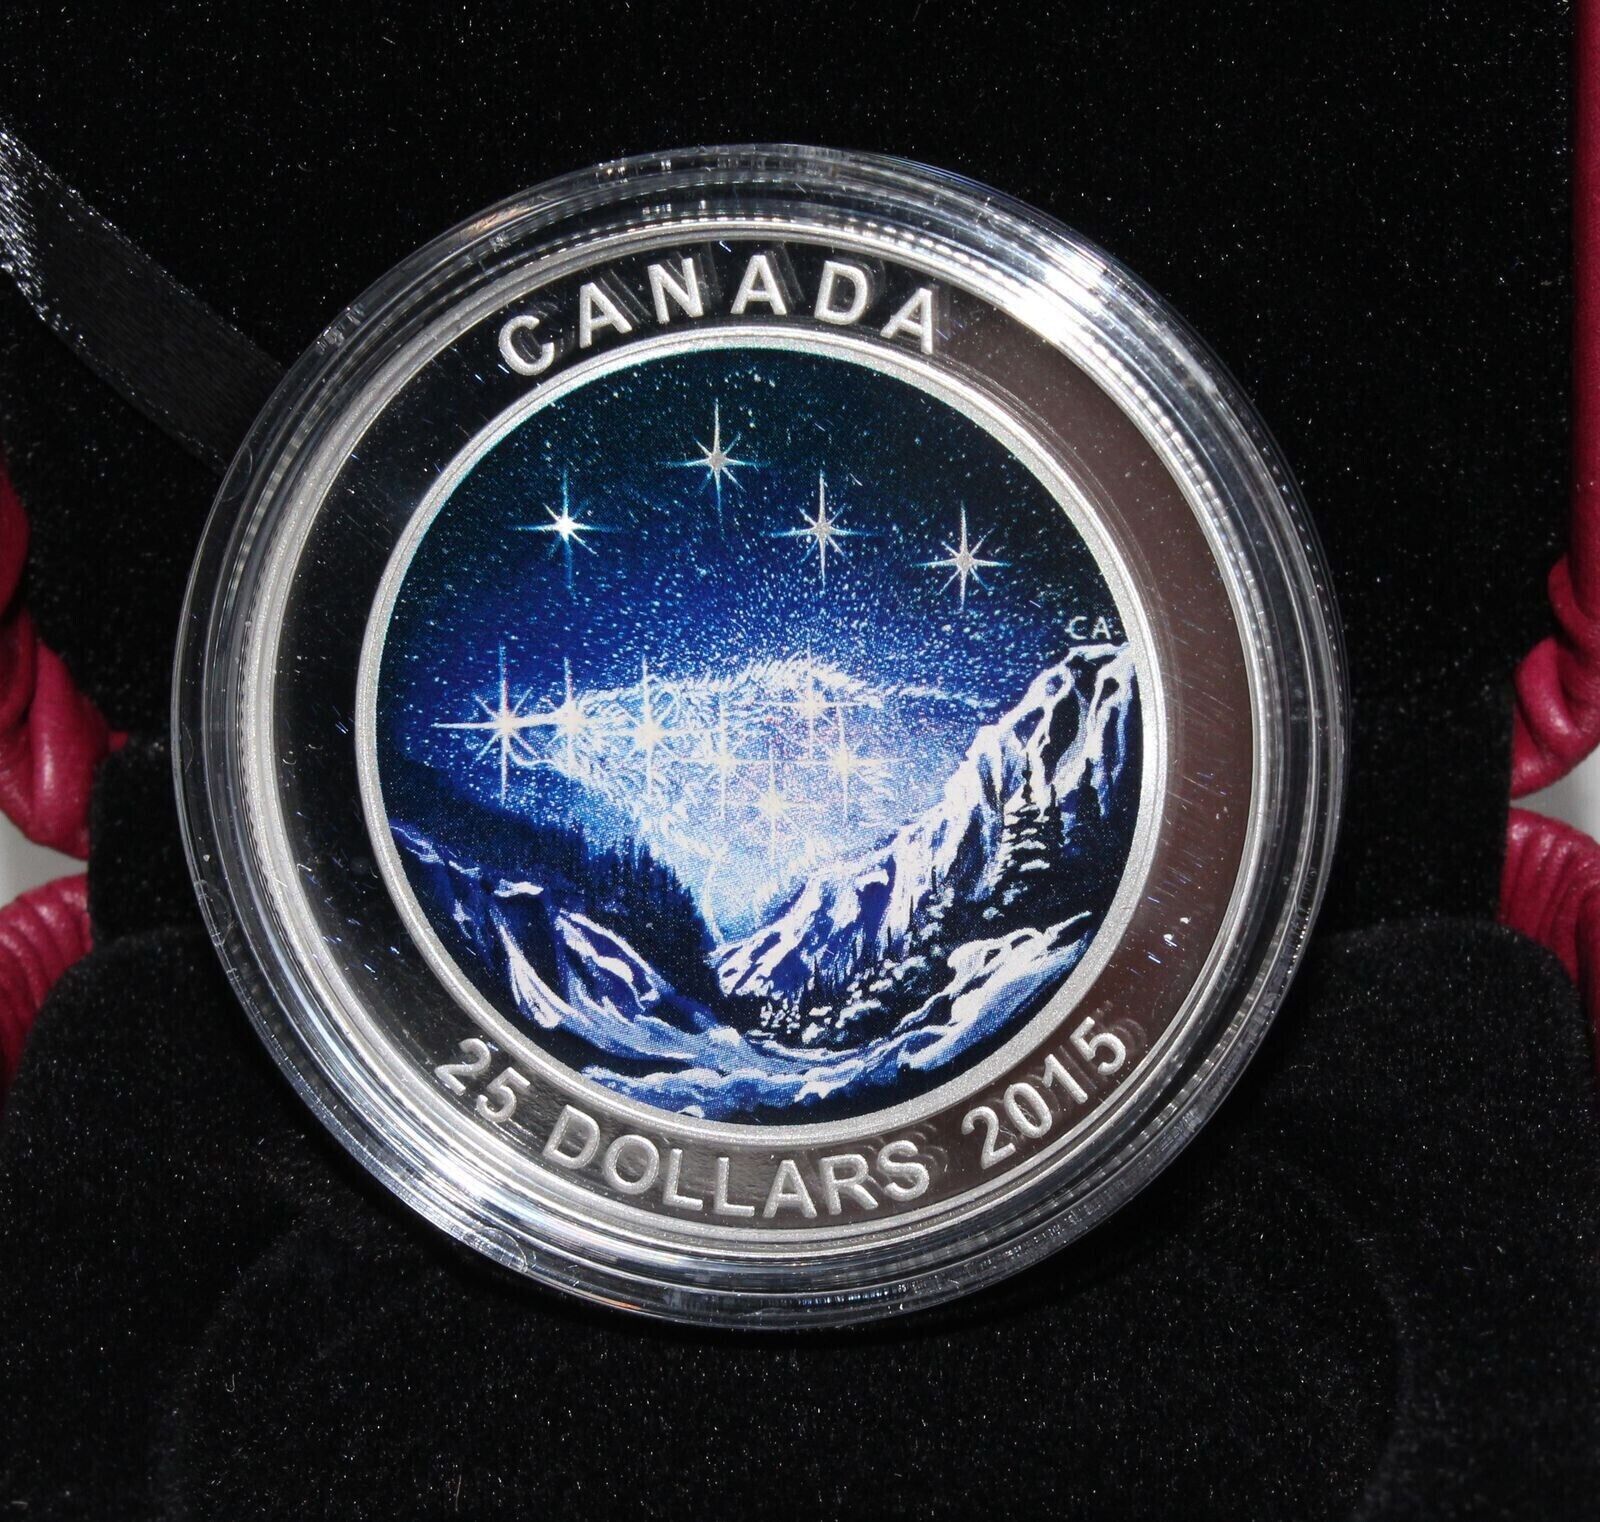 1 oz Silver Coin 2015 Canada $25 Star Charts - Eternal Pursuit Glow in the Dark-classypw.com-3